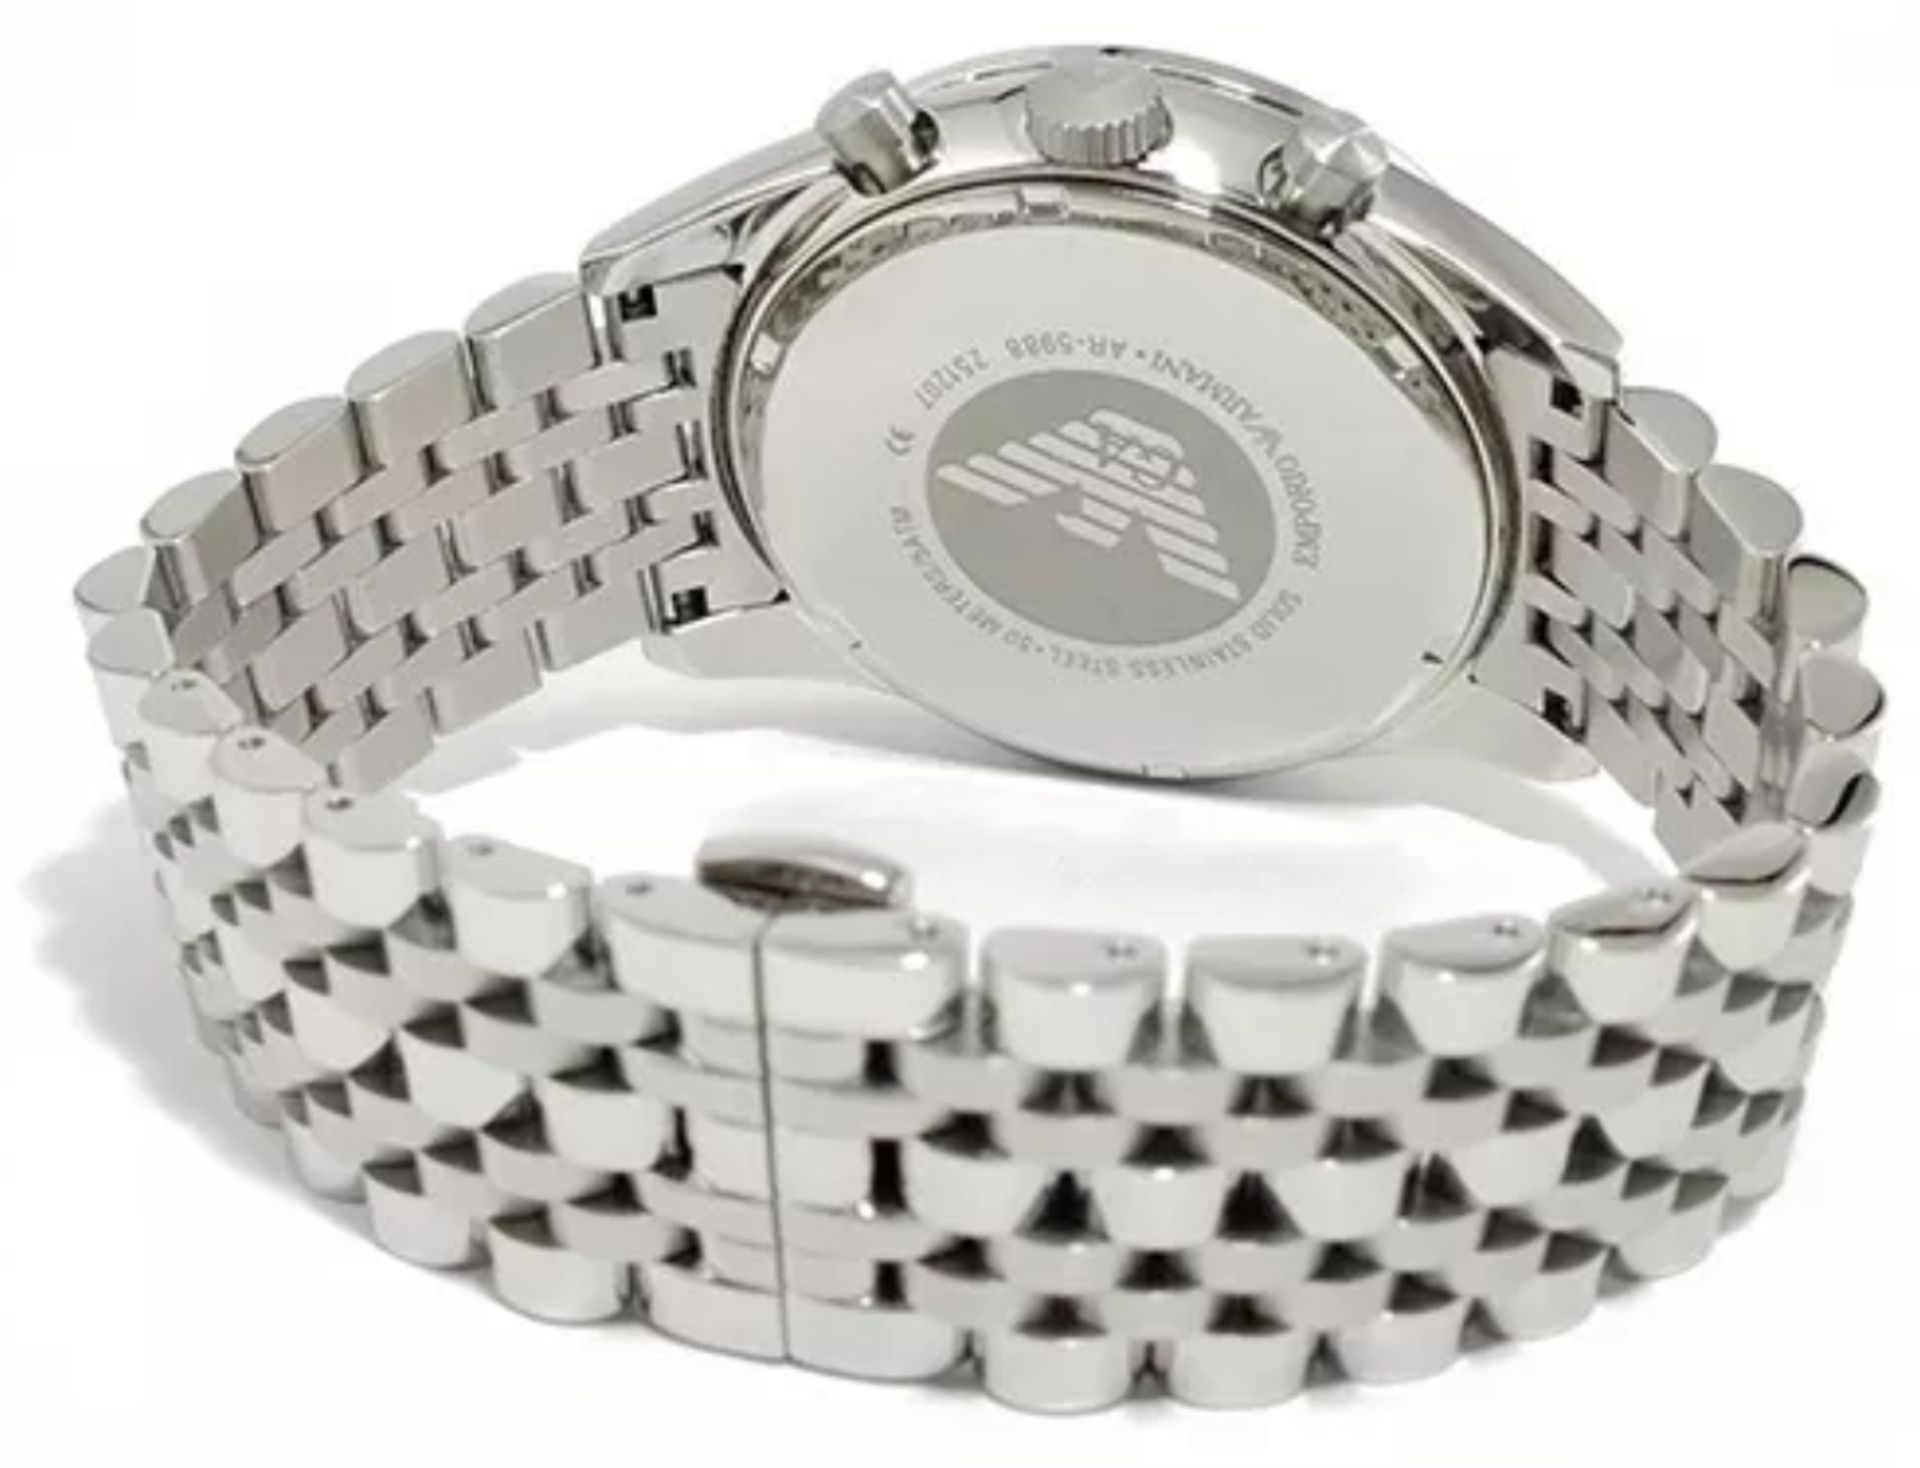 Emporio Armani AR5988 Men's Tazio Black Dial Silver Bracelet Chronograph Watch - Image 6 of 10